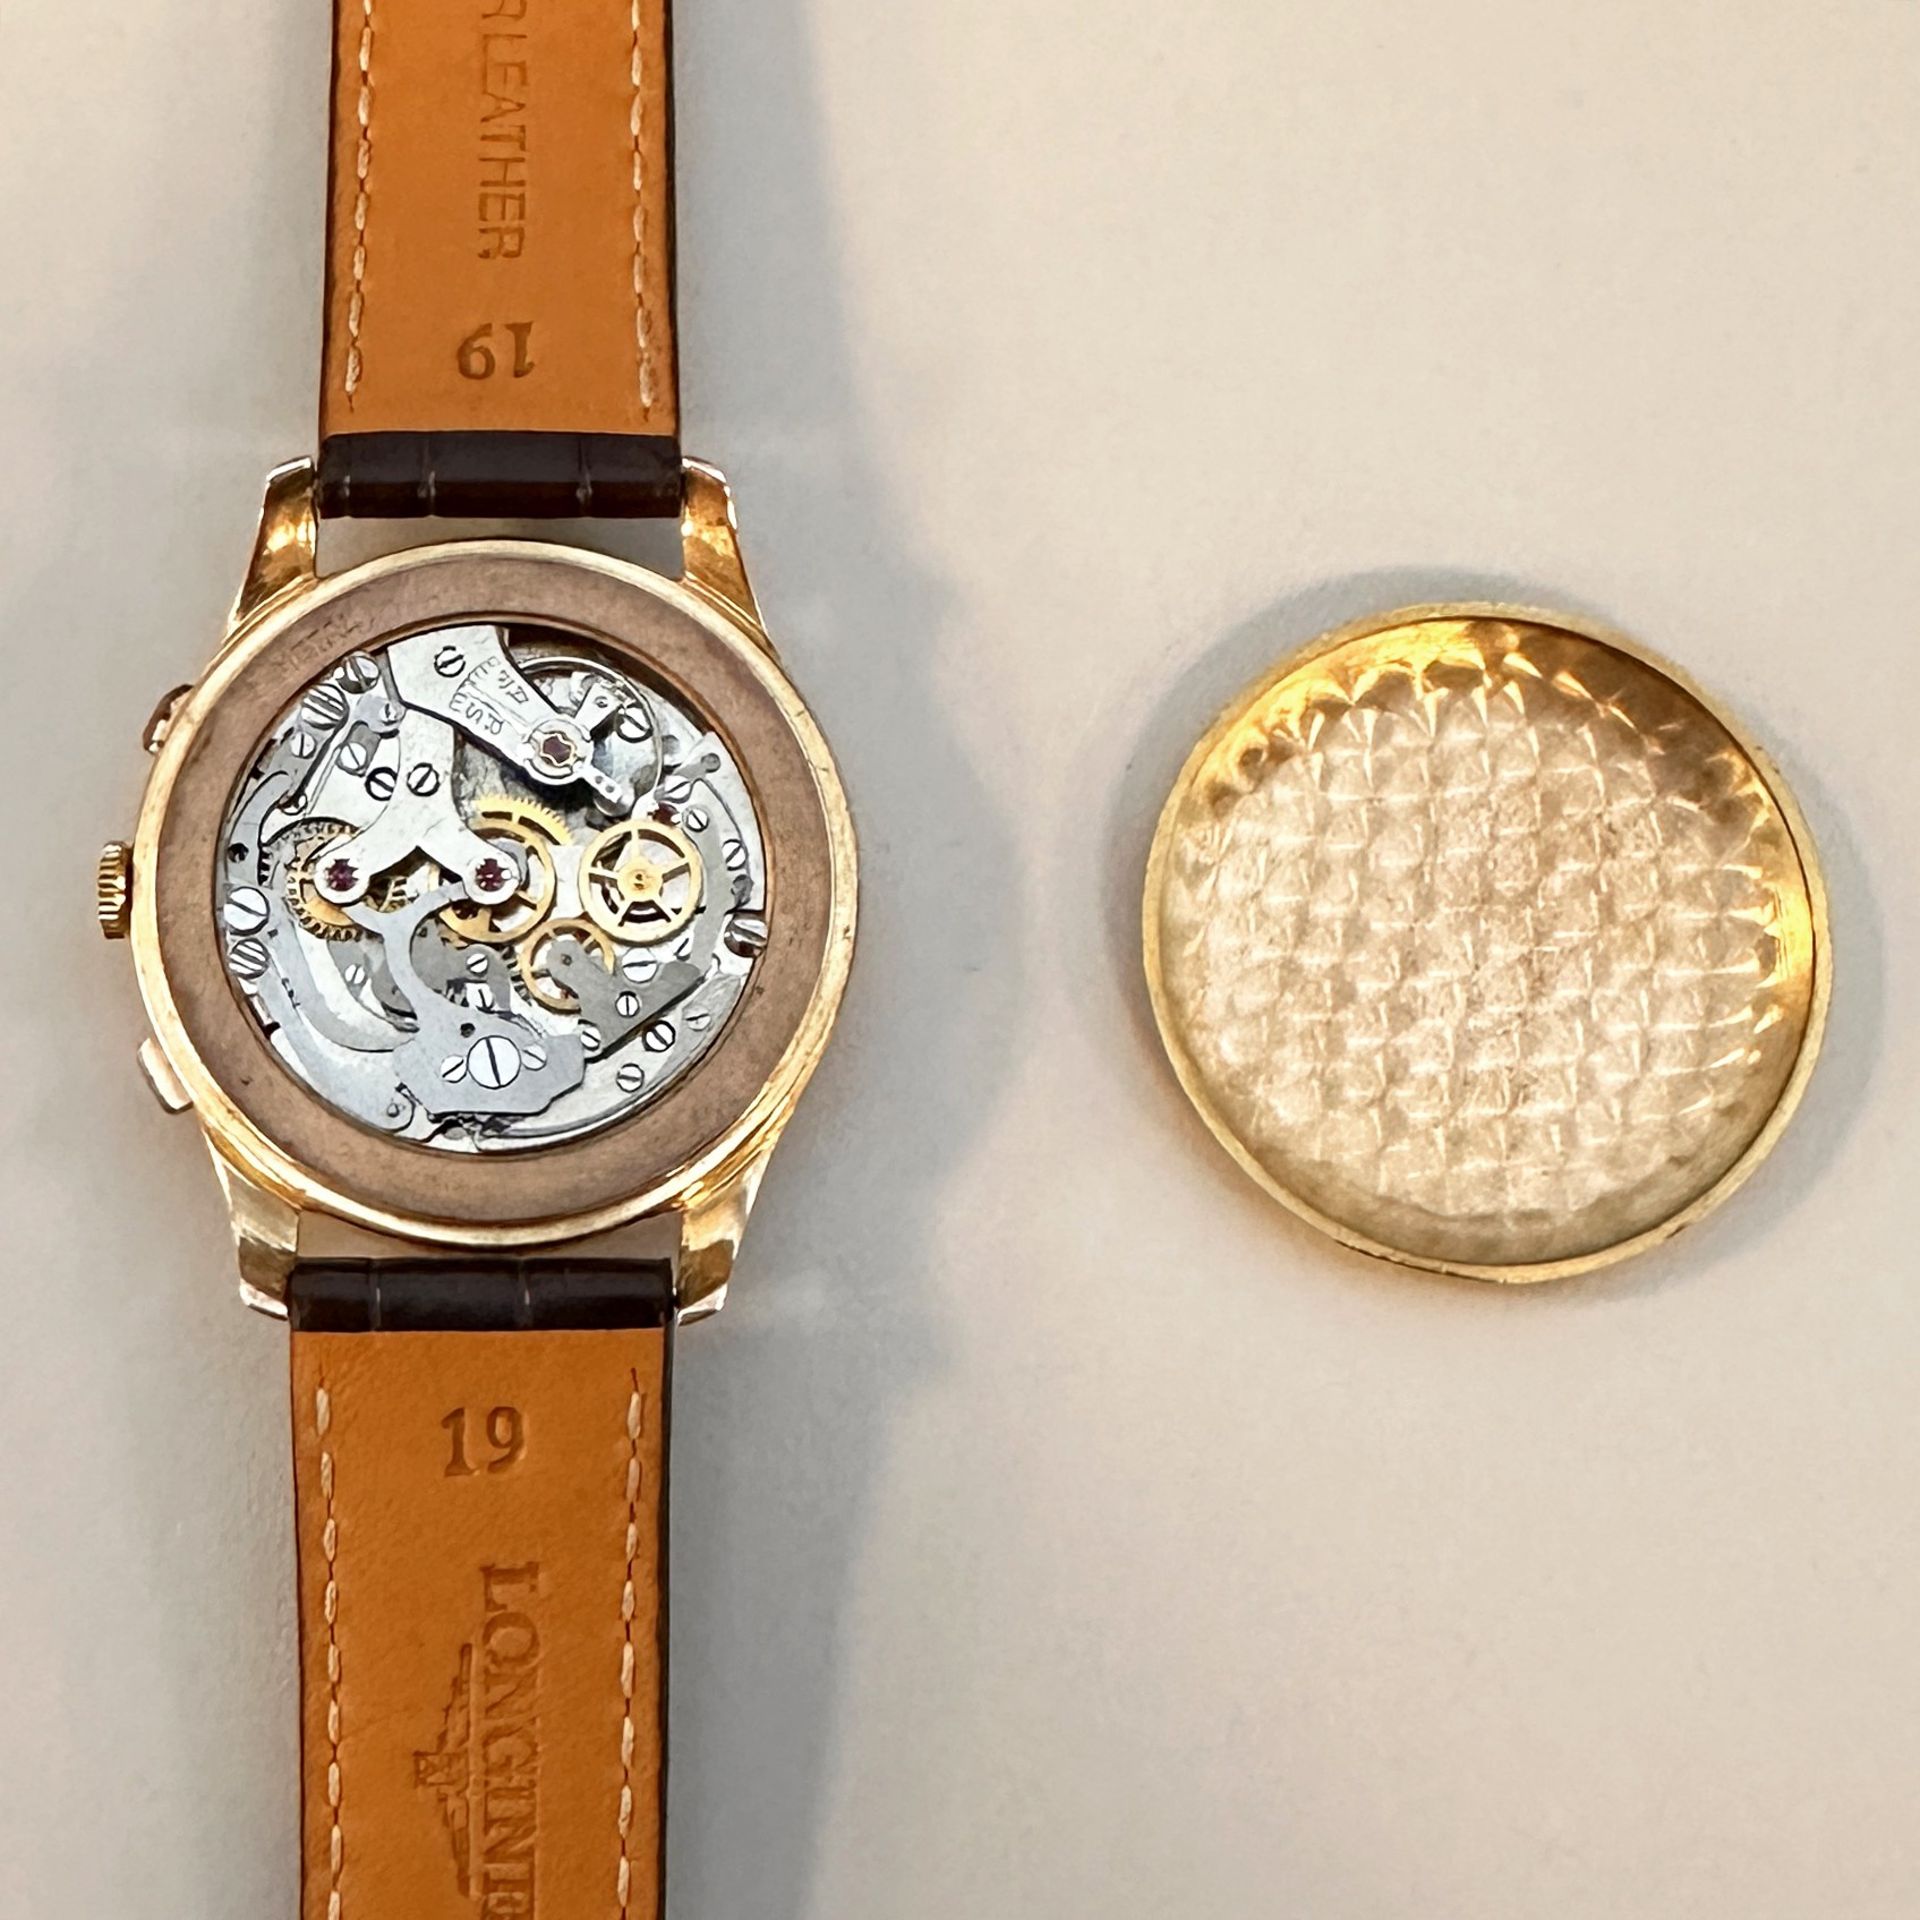 No Reserve - Relbi Chronograph Suisse (18K.) - Men's watch. - Bild 6 aus 6